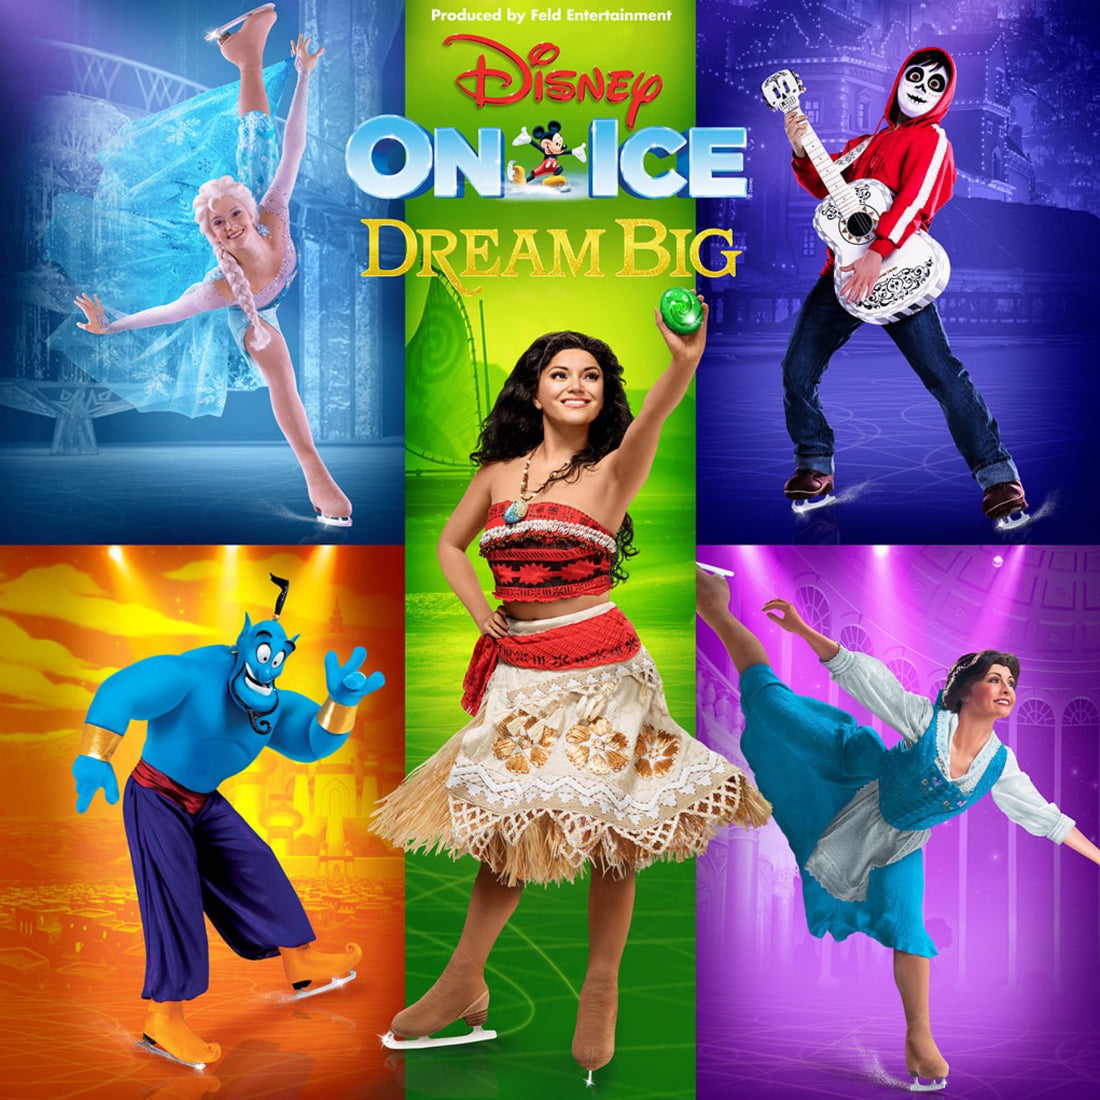 Disney On Ice presents Dream Big